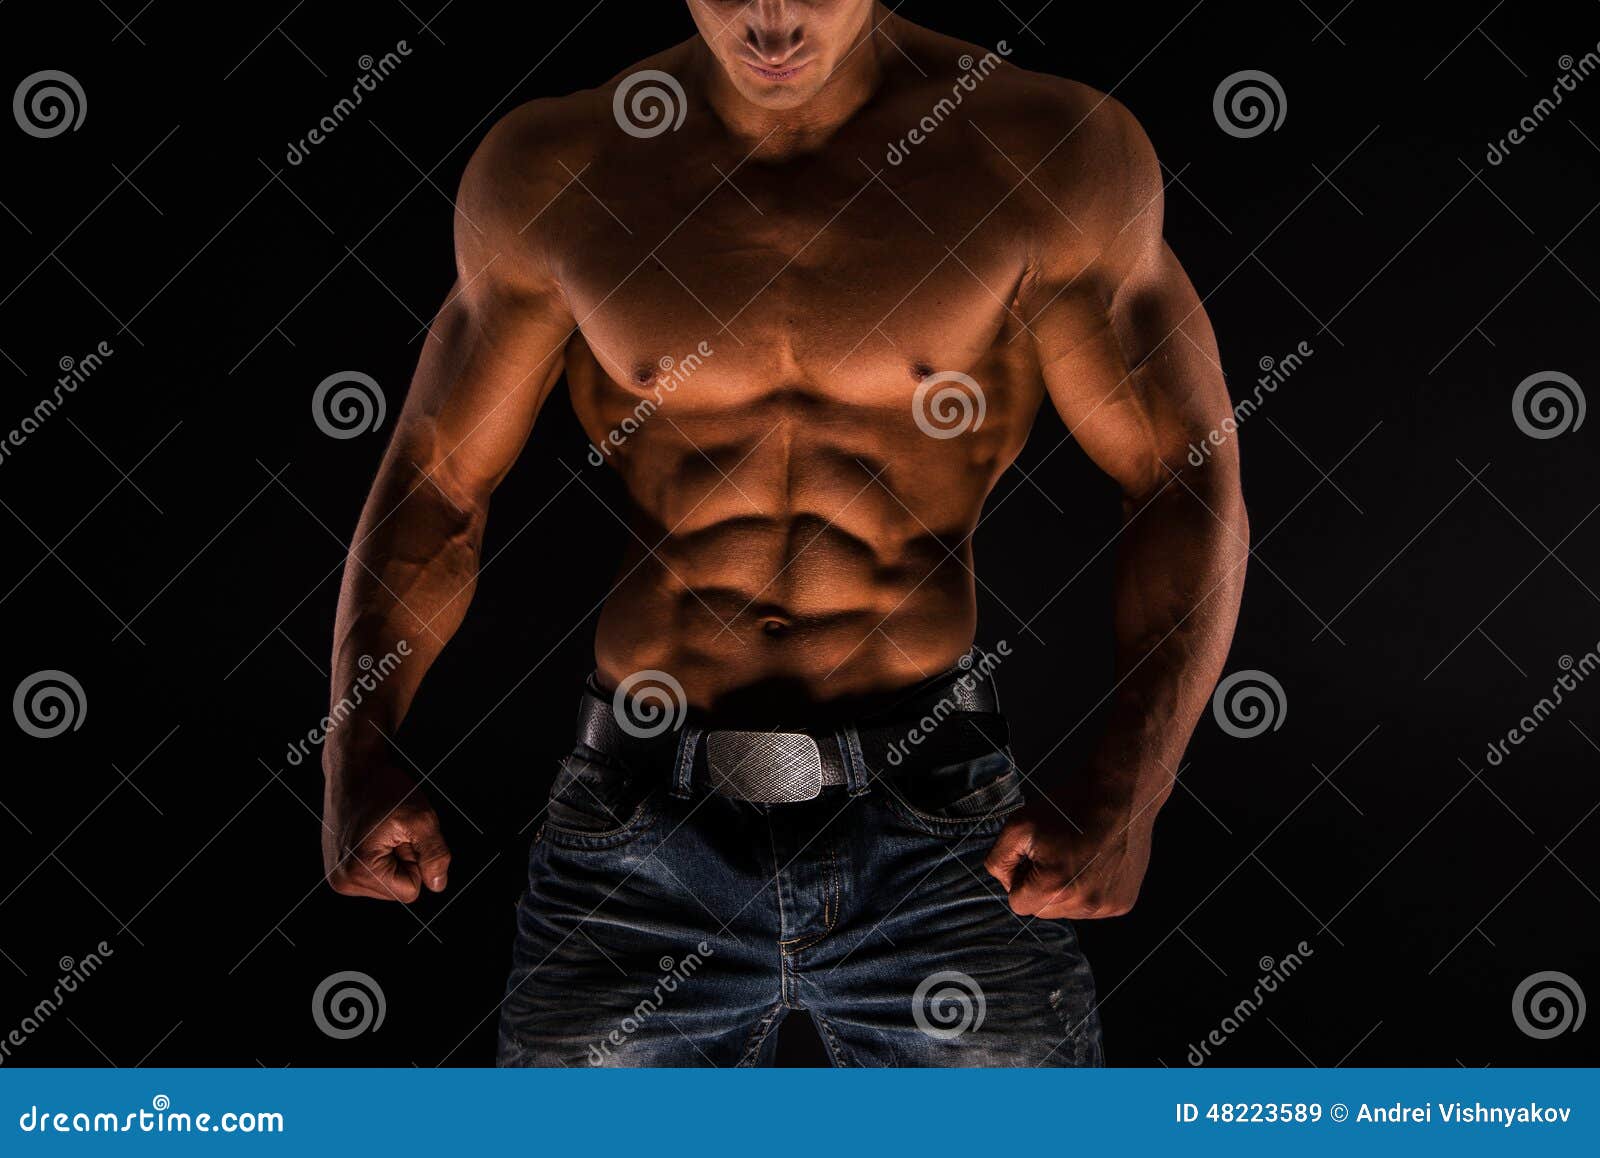 fitness male torso